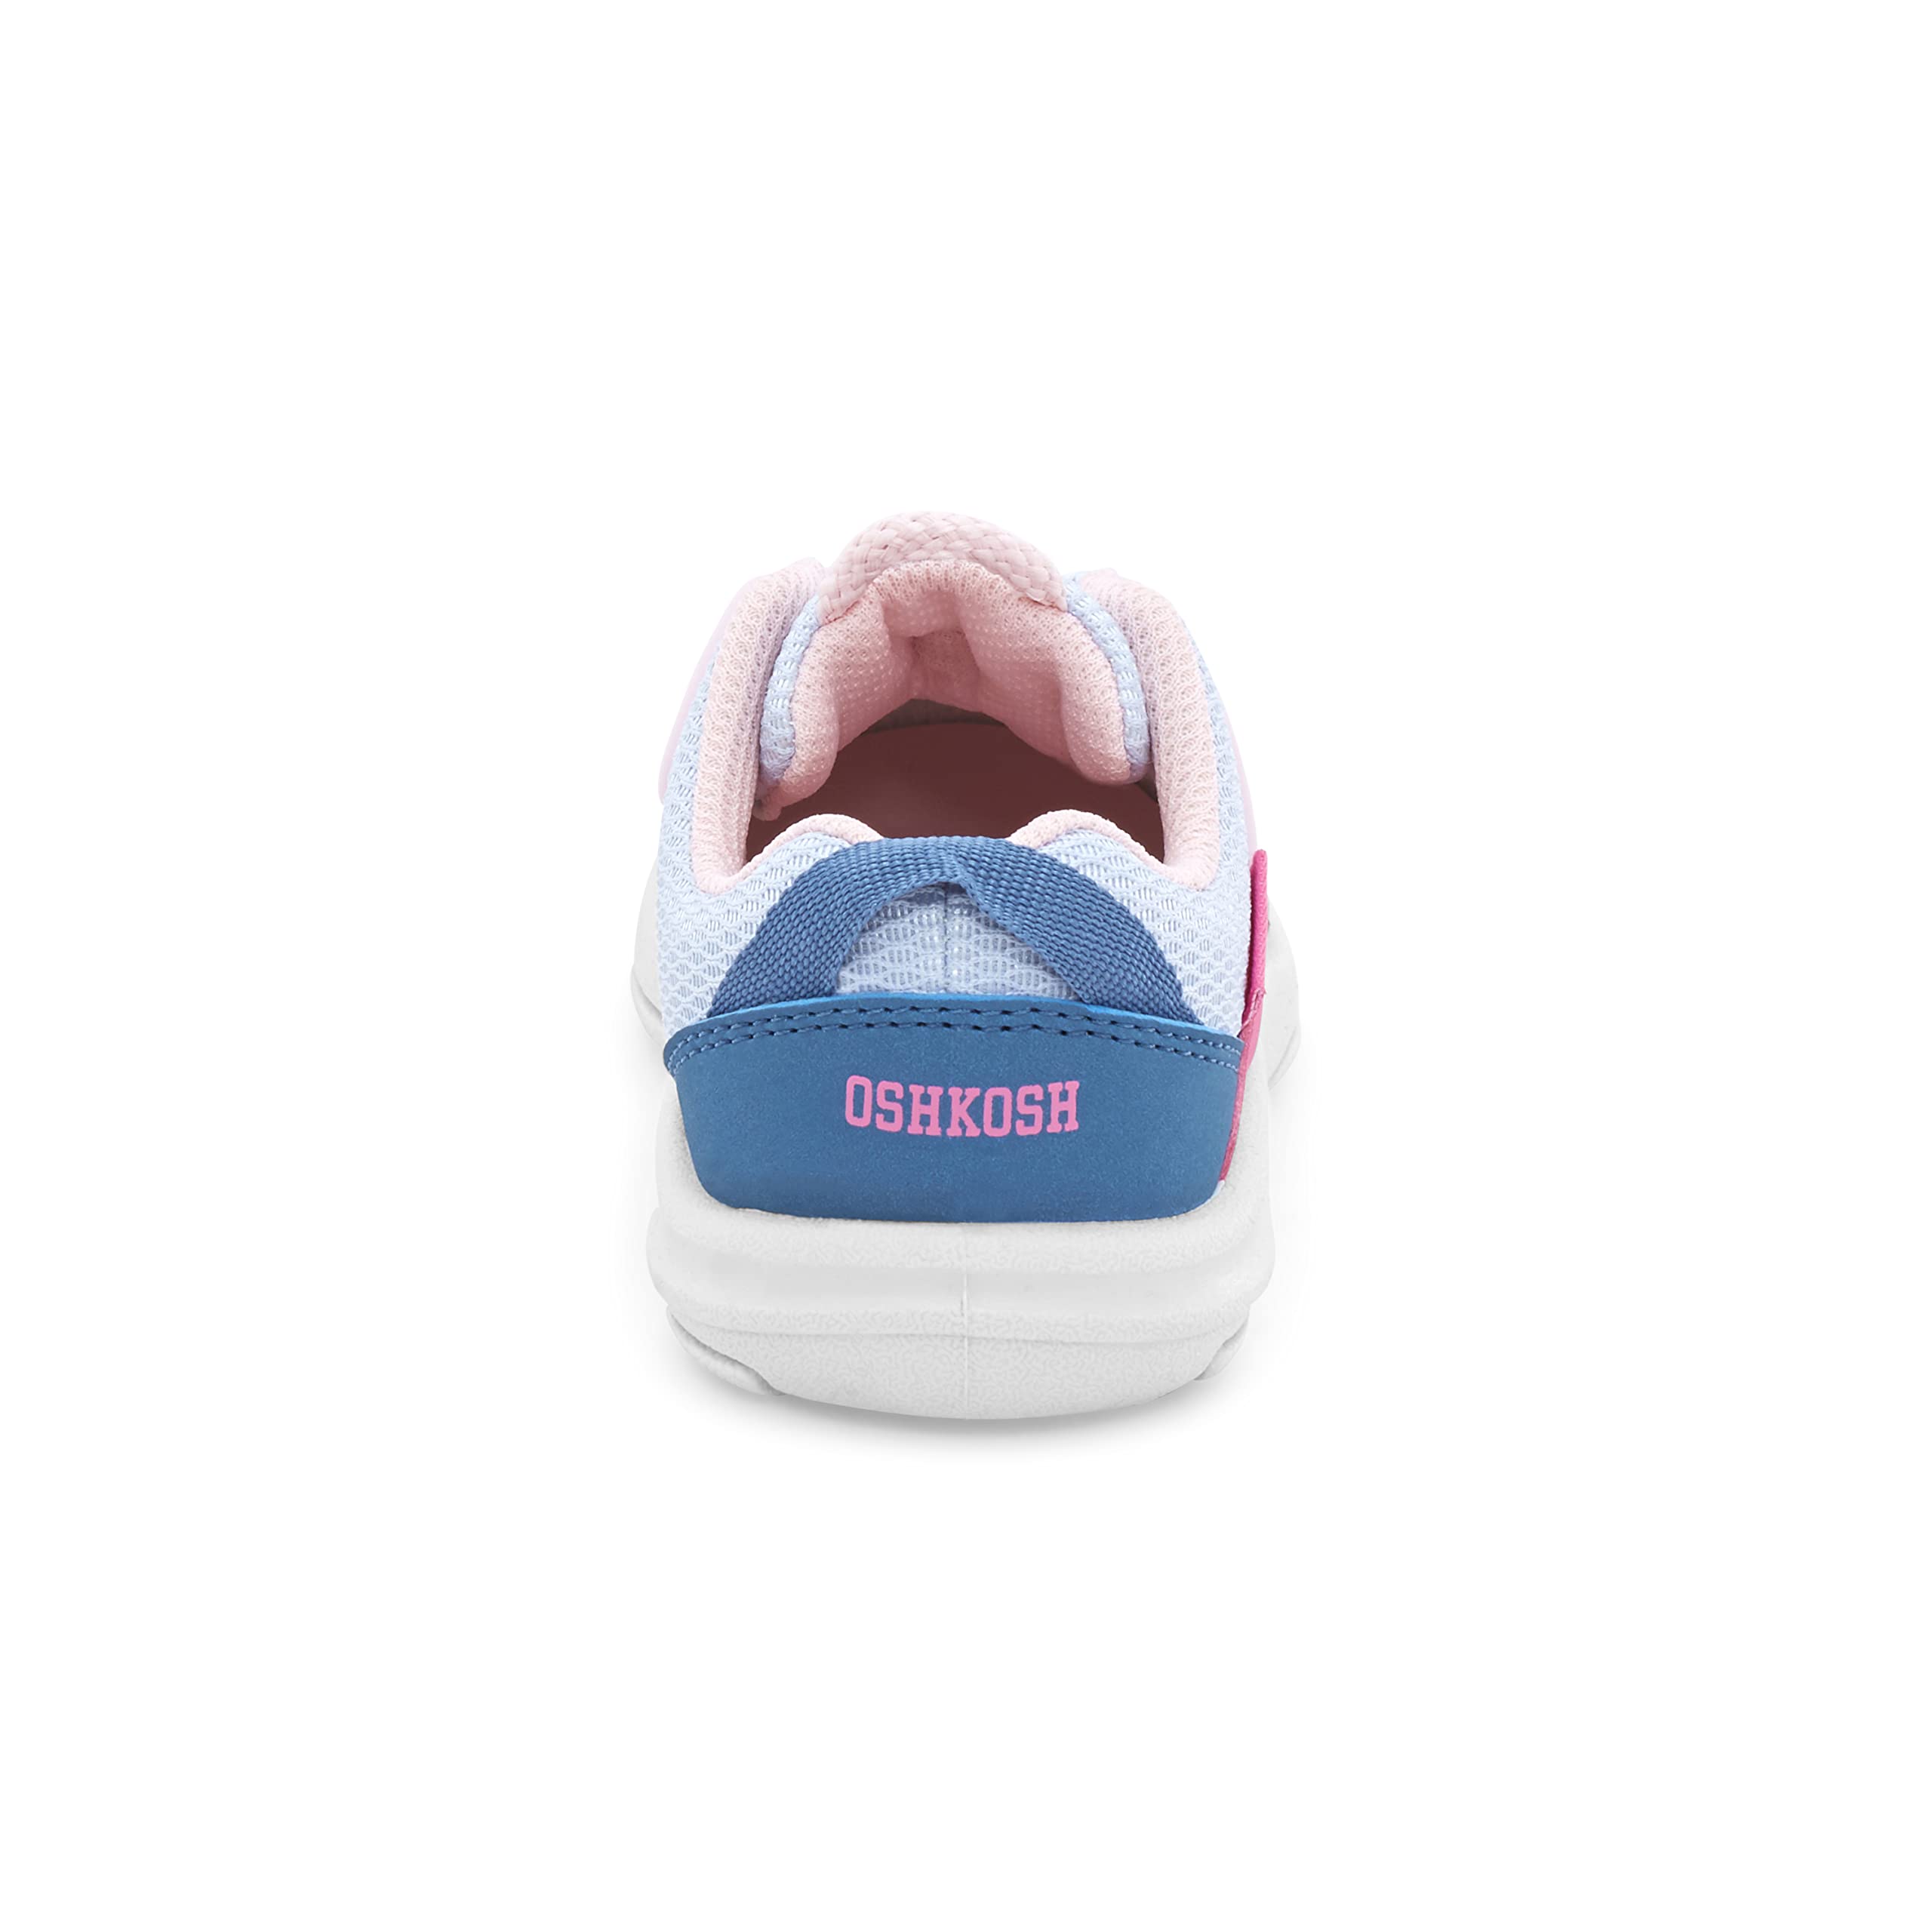 OshKosh B'Gosh Unisex-Child Junip Slip-On Sneaker